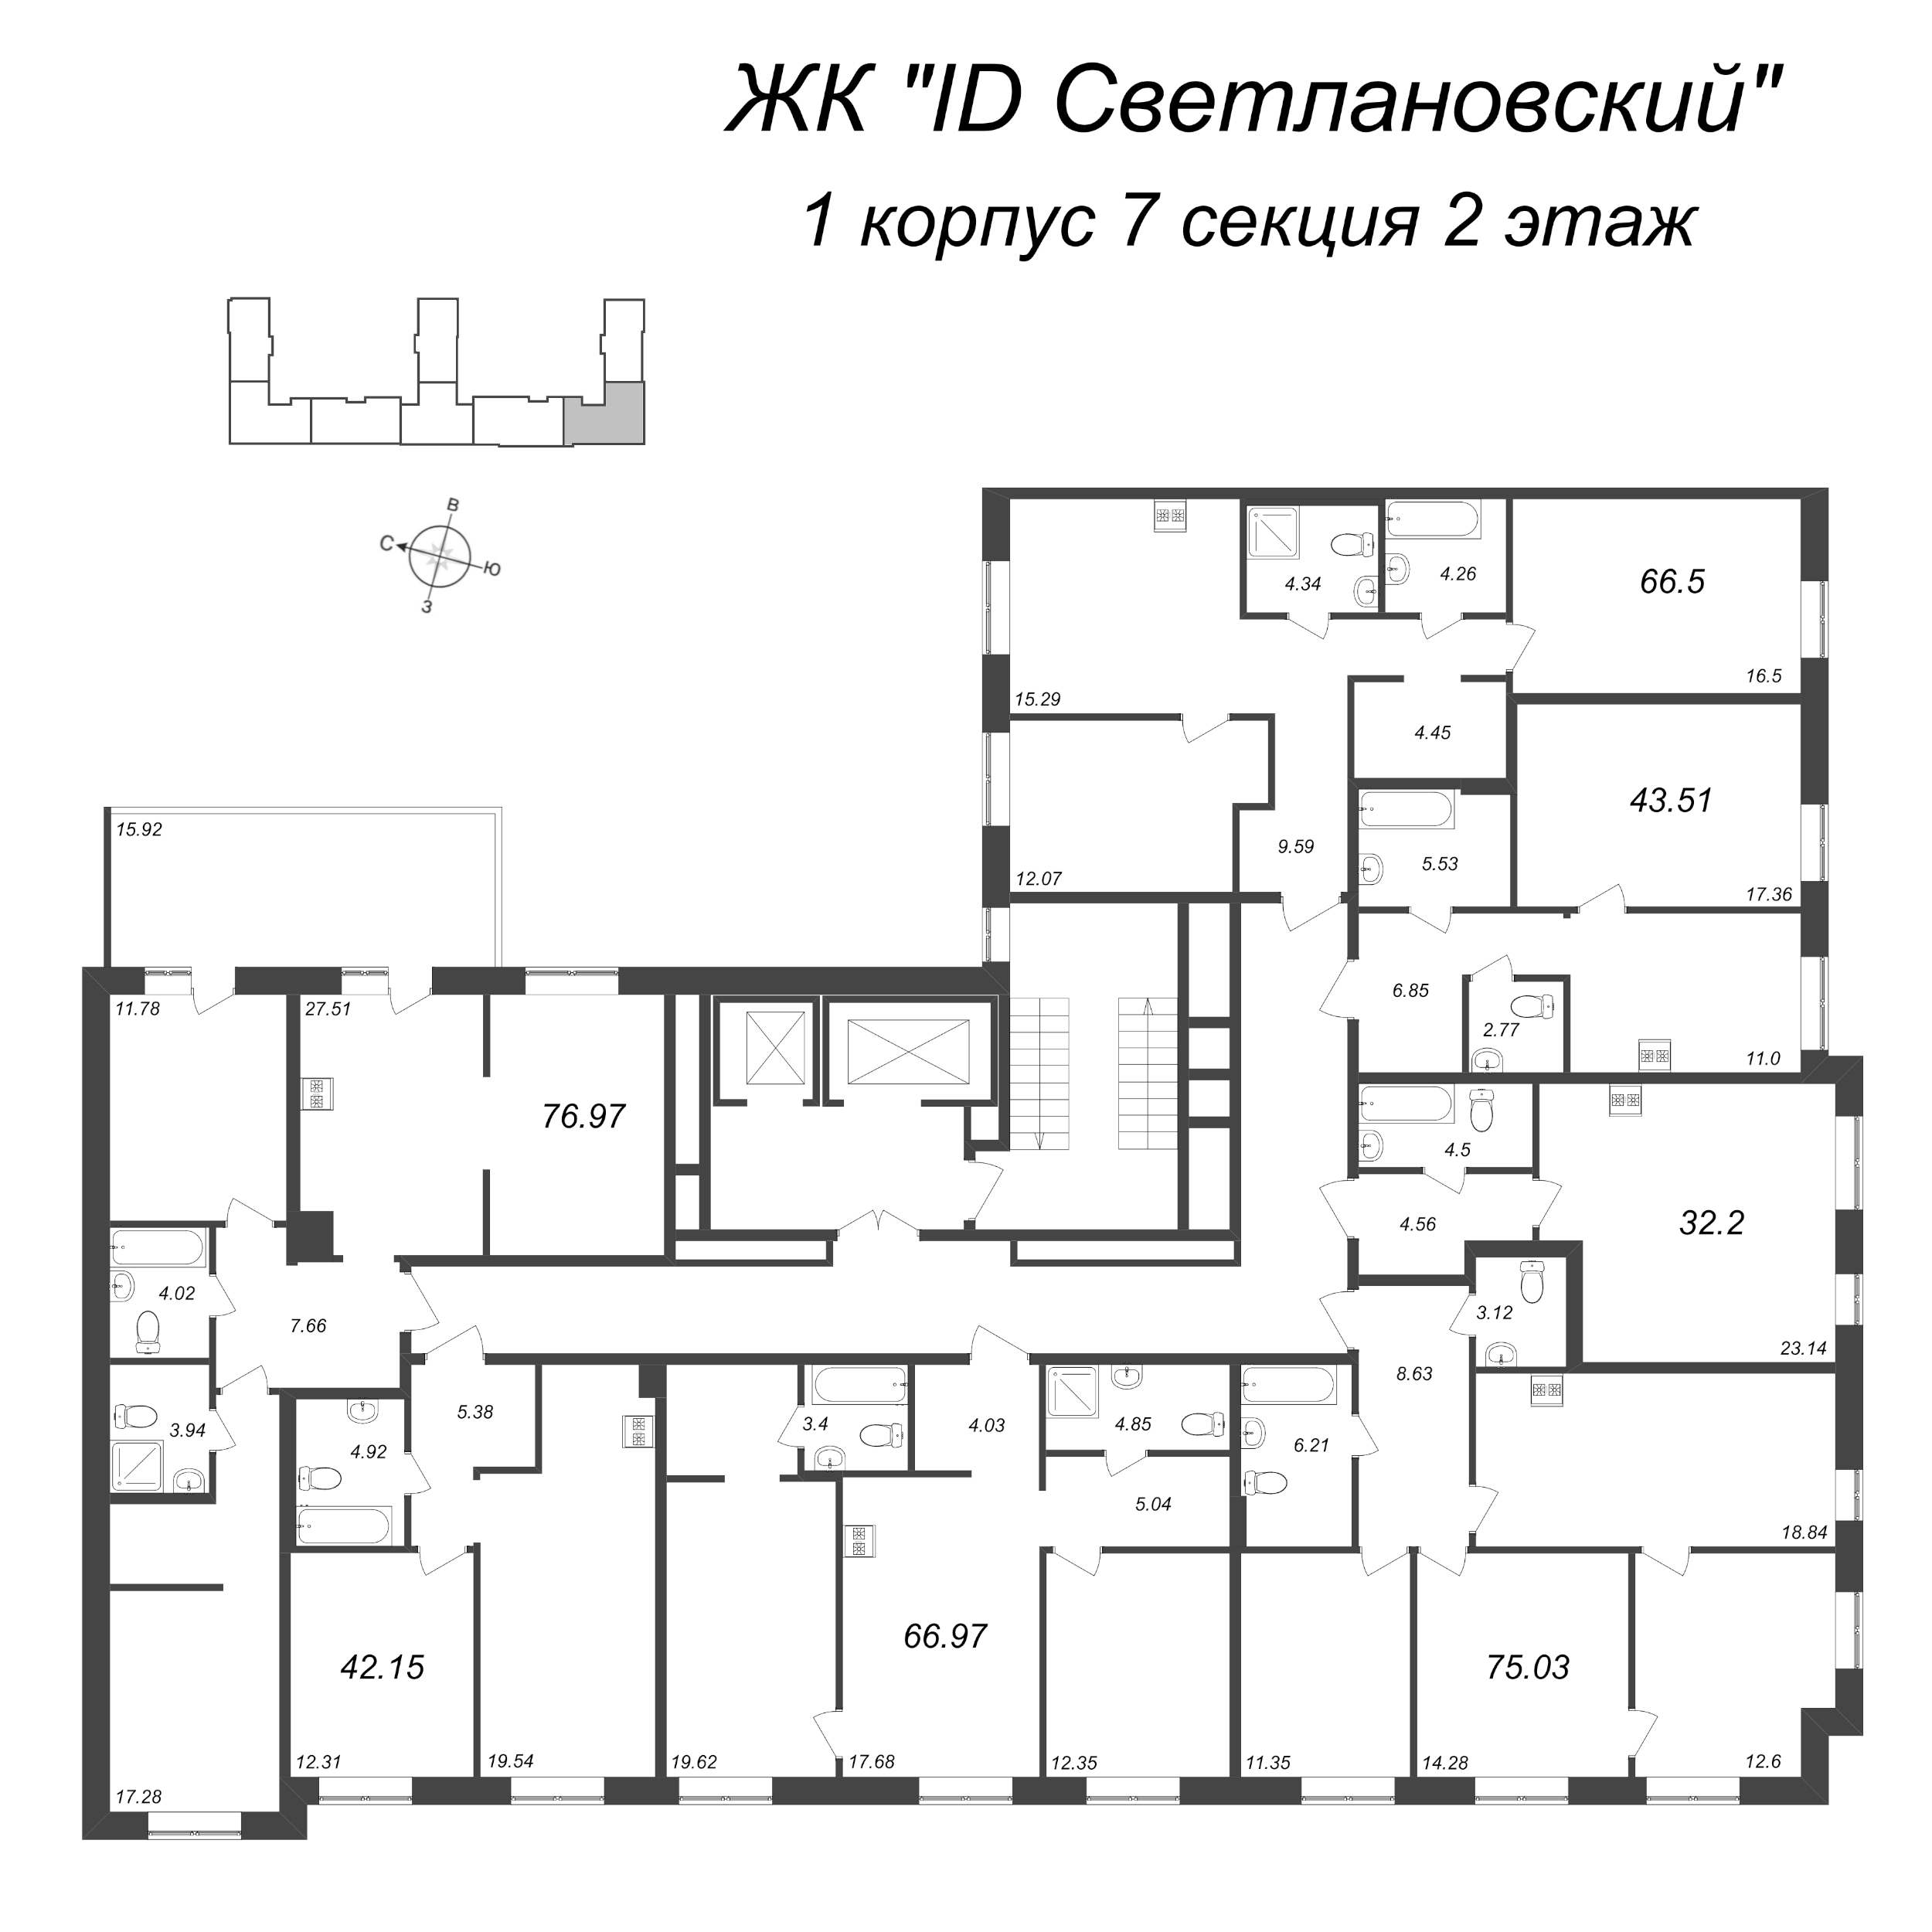 3-комнатная (Евро) квартира, 66.5 м² - планировка этажа